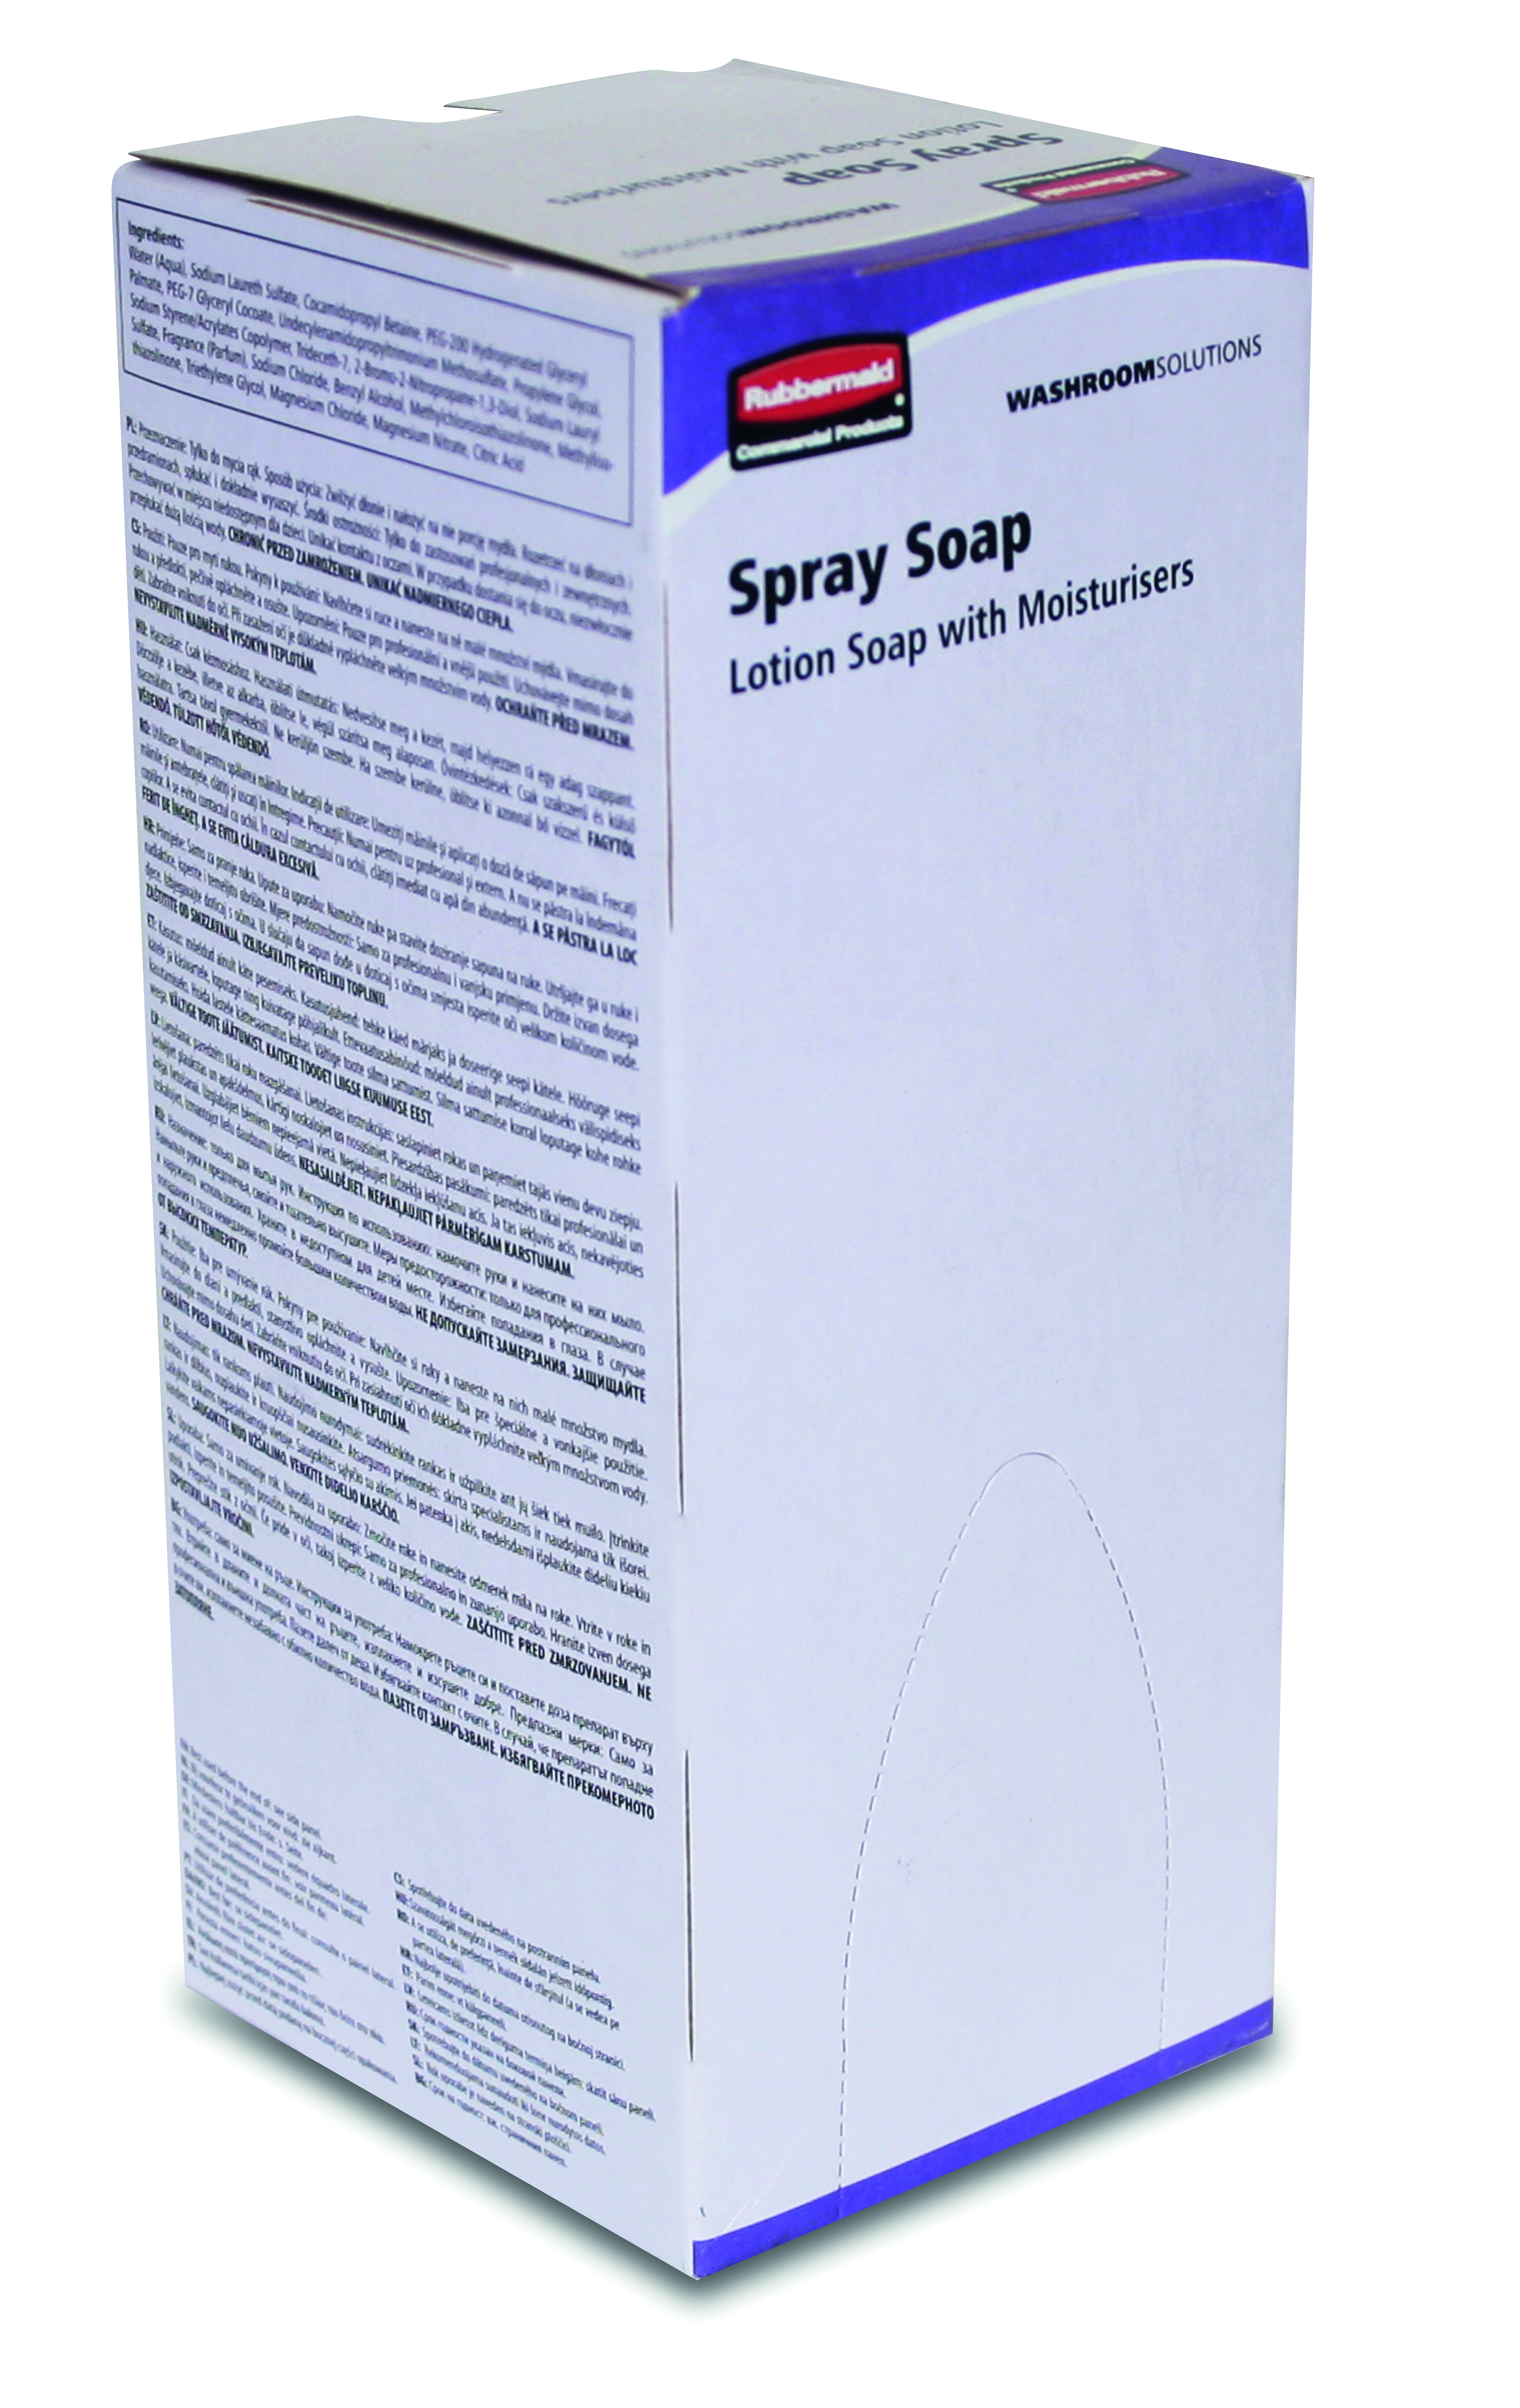 RJ - Anti-Bacterial Spray Soap 800ml